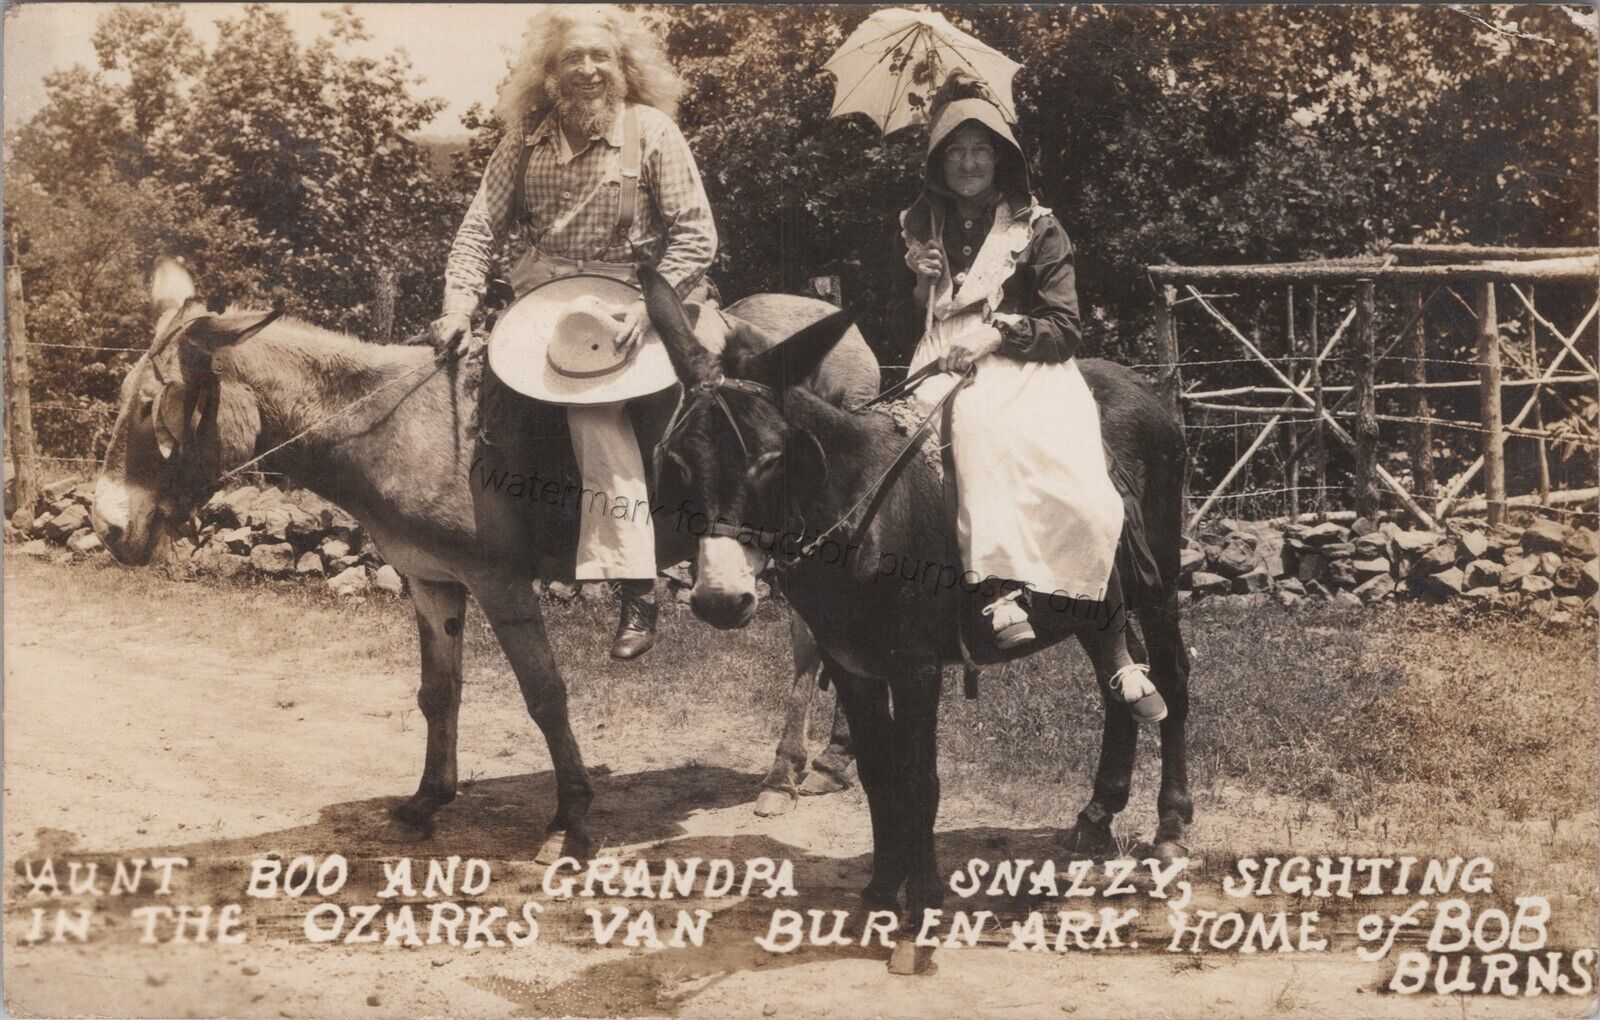 Garfield, AR: RPPC 1939 Aunt Boo & Grandpa, vtg Arkansas Real Photo Postcard